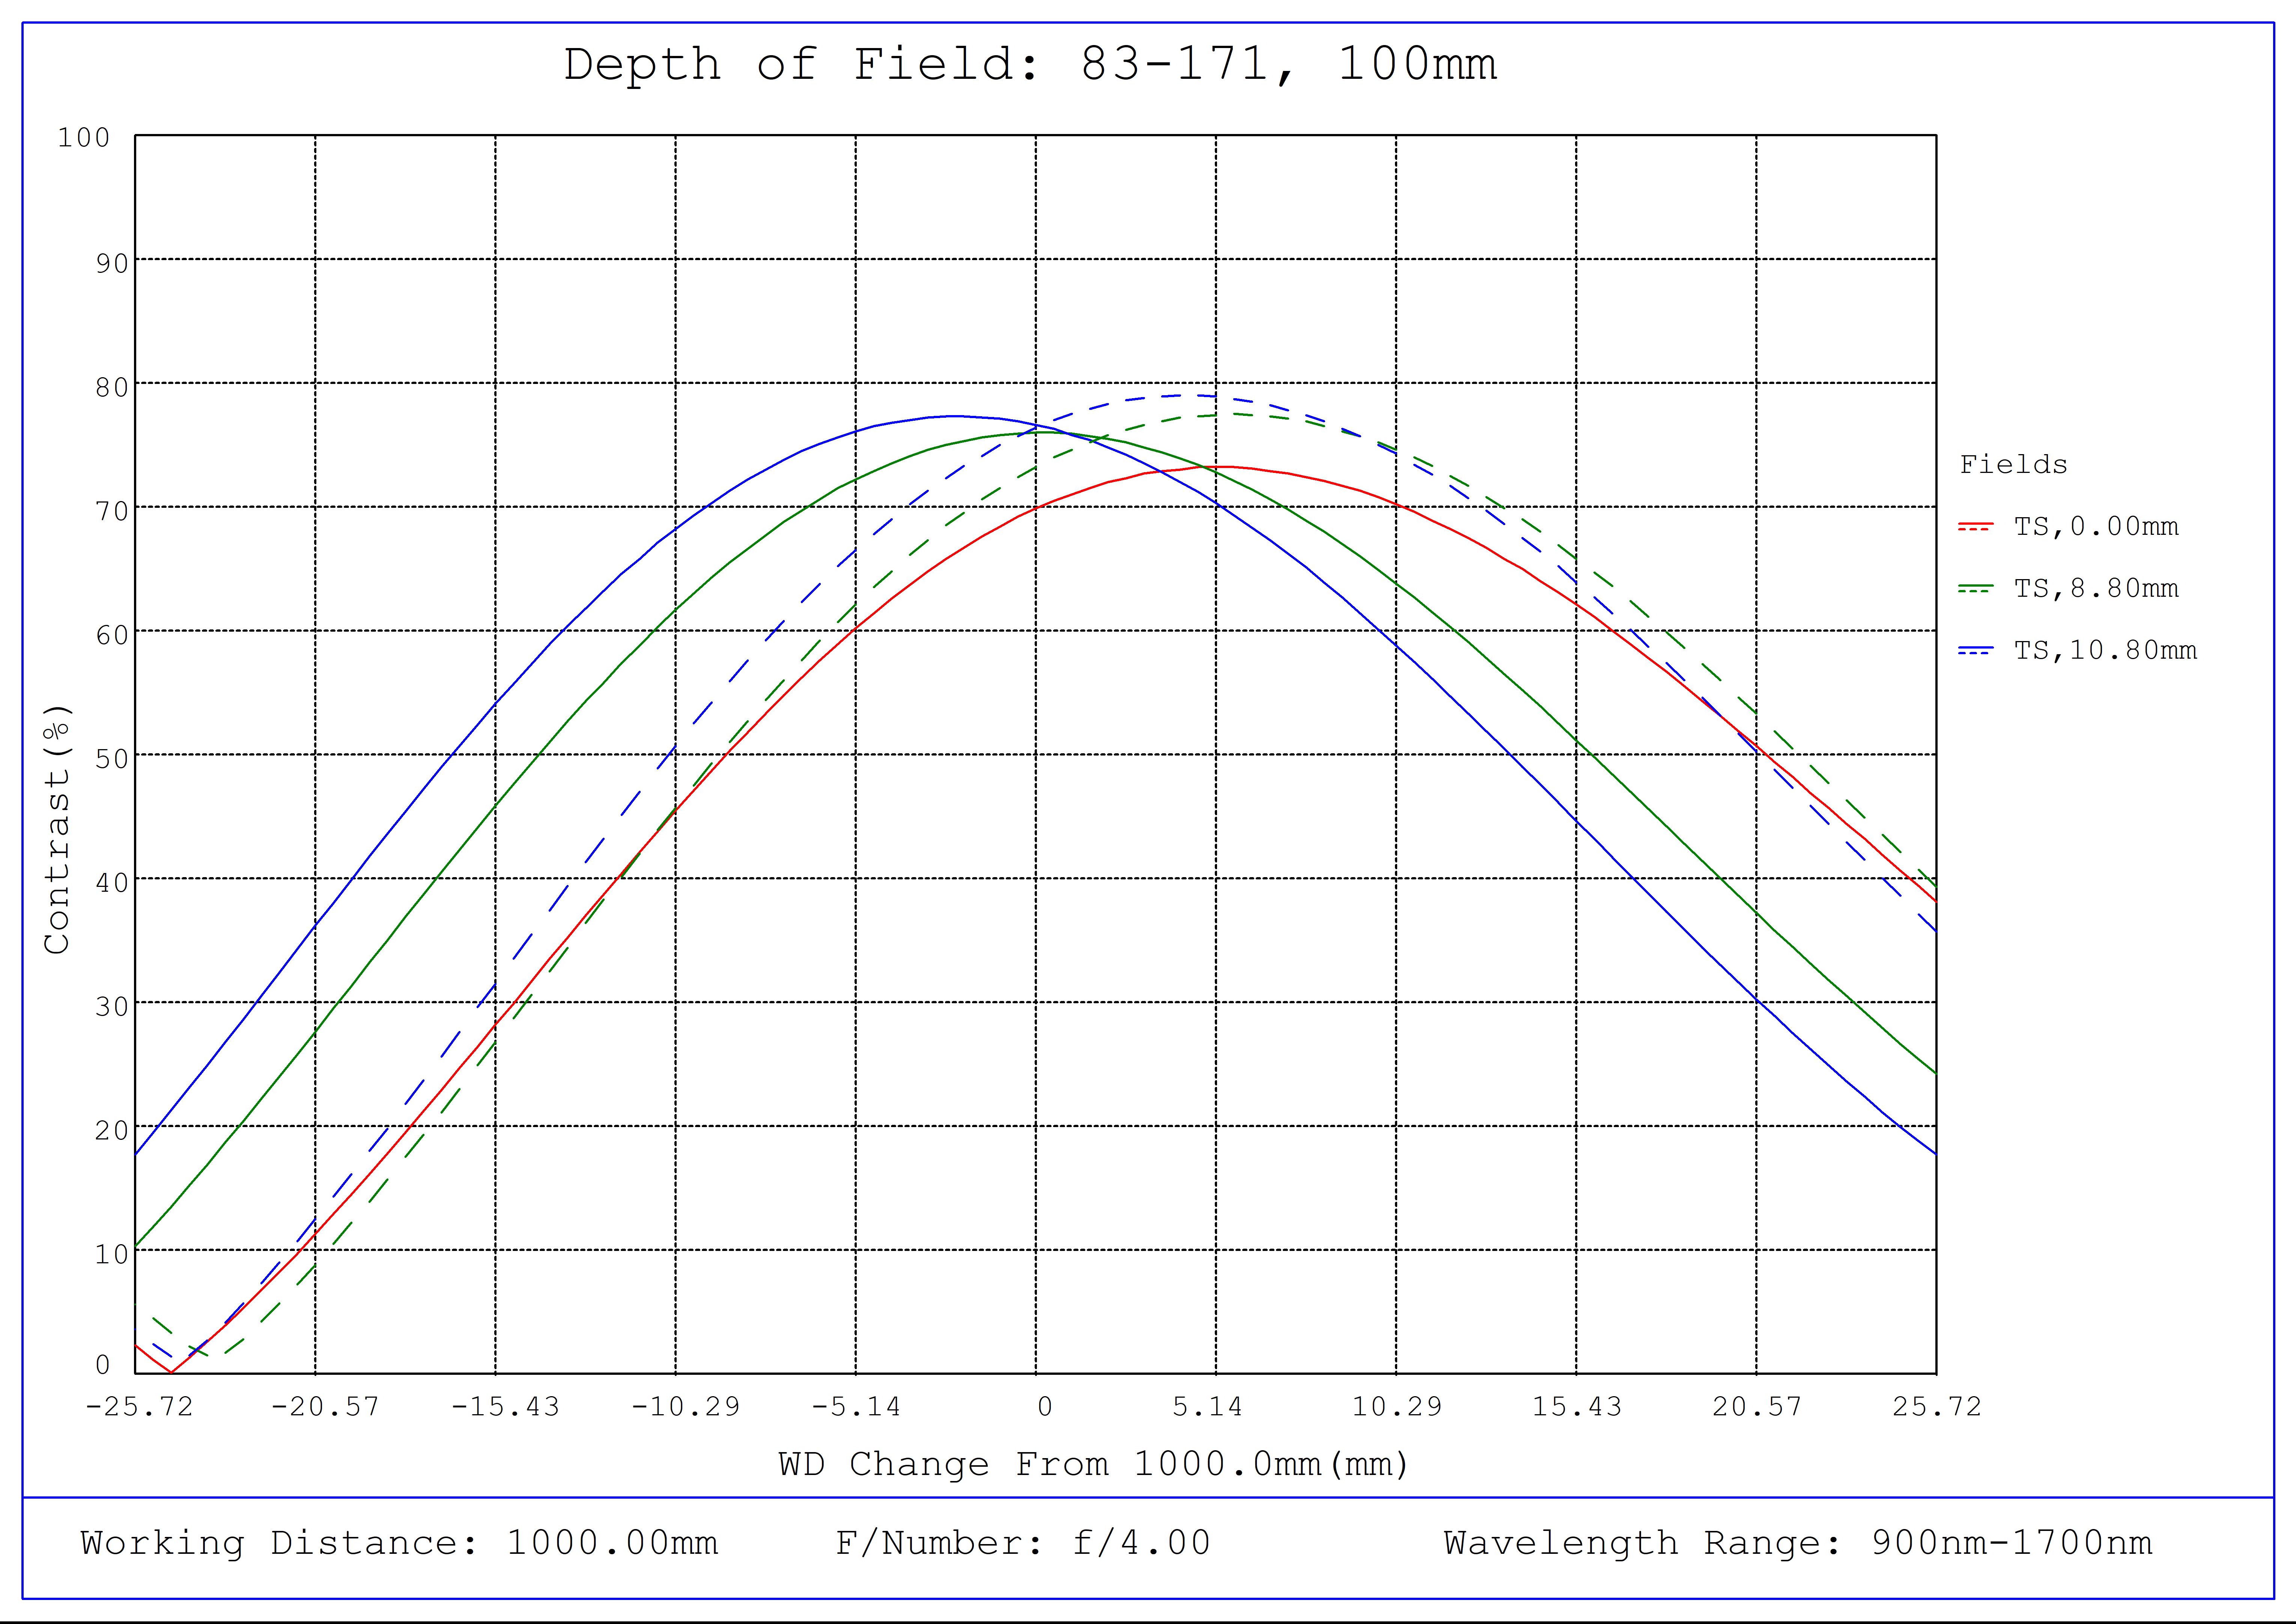 #83-171, 100mm SWIR Series Fixed Focal Length Lens, F-Mount, Depth of Field Plot, 1000mm Working Distance, f4